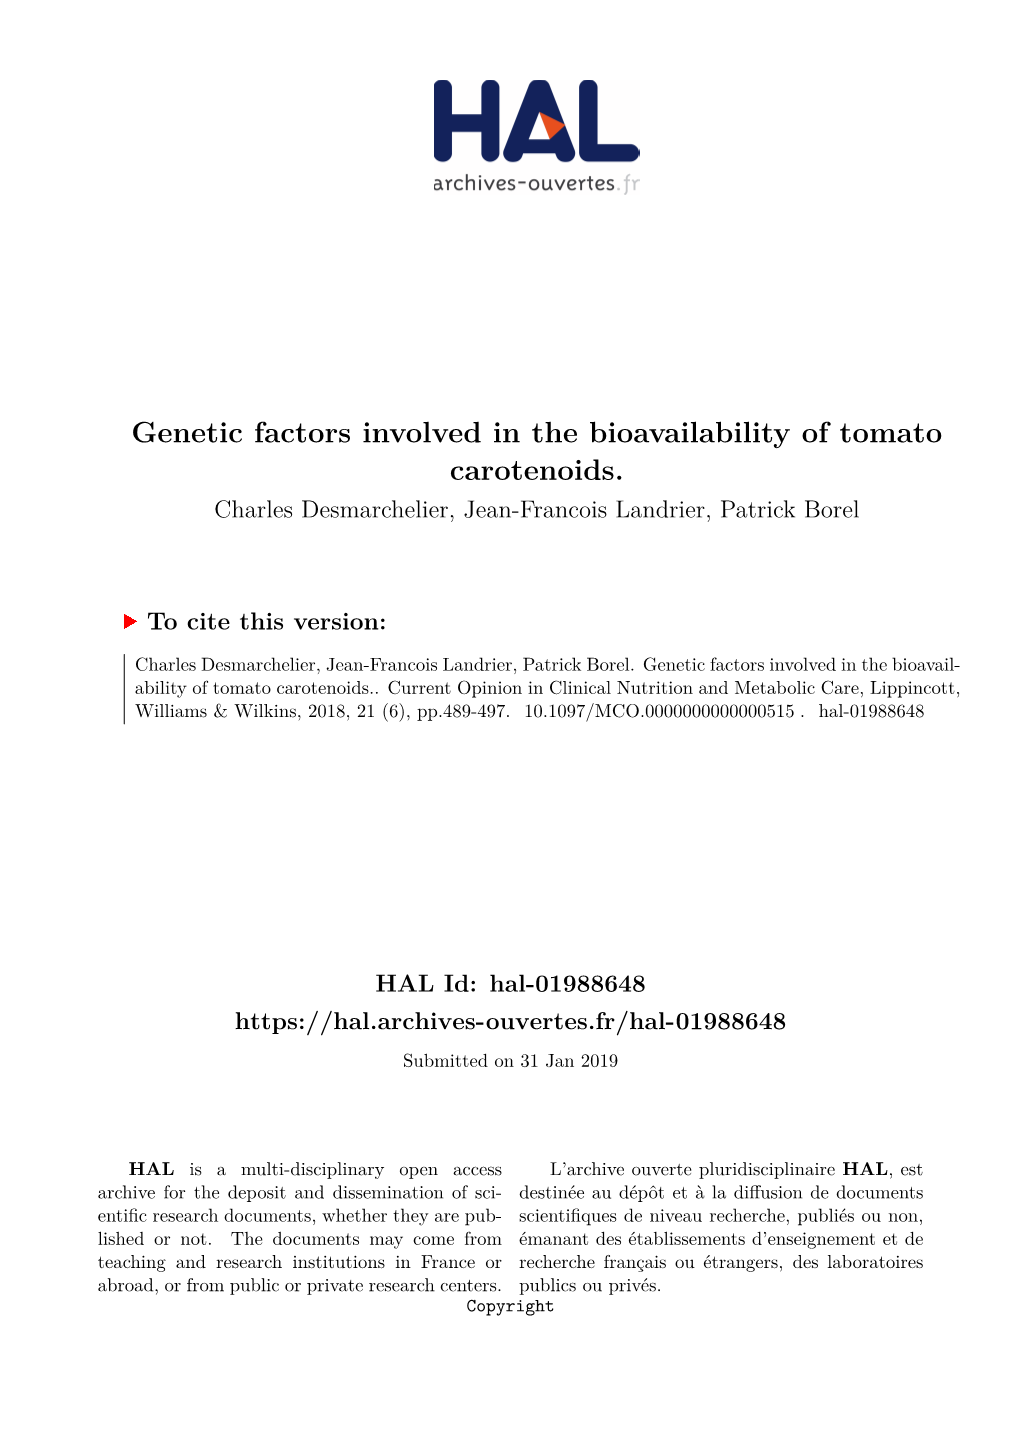 Genetic Factors Involved in the Bioavailability of Tomato Carotenoids. Charles Desmarchelier, Jean-Francois Landrier, Patrick Borel